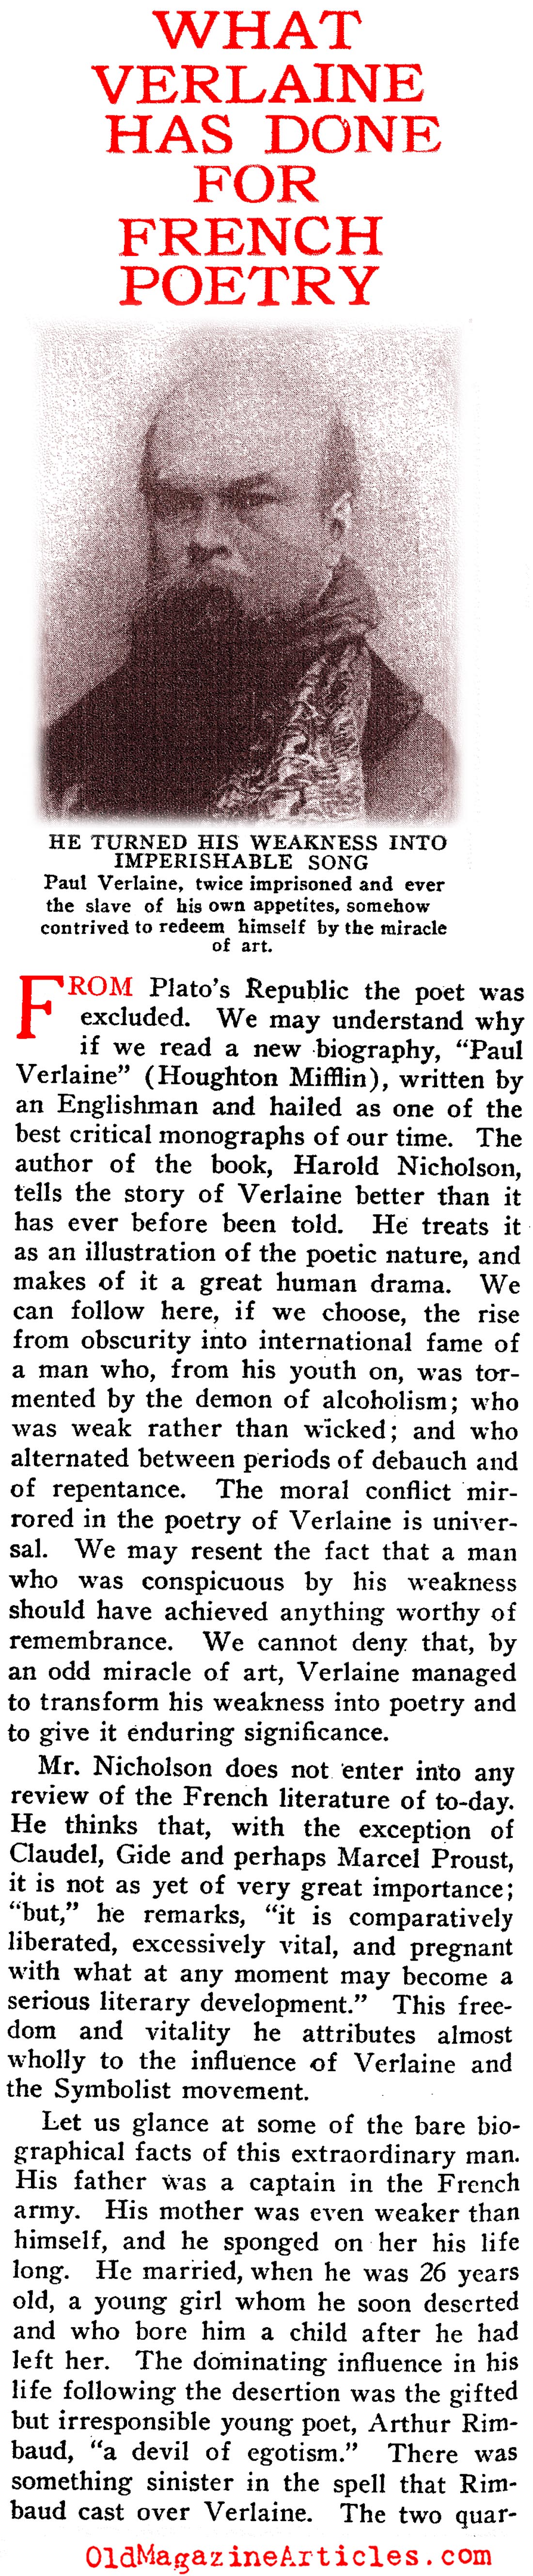 Harold Nicolson on Paul Verlaine (Current Opinion, 1921)